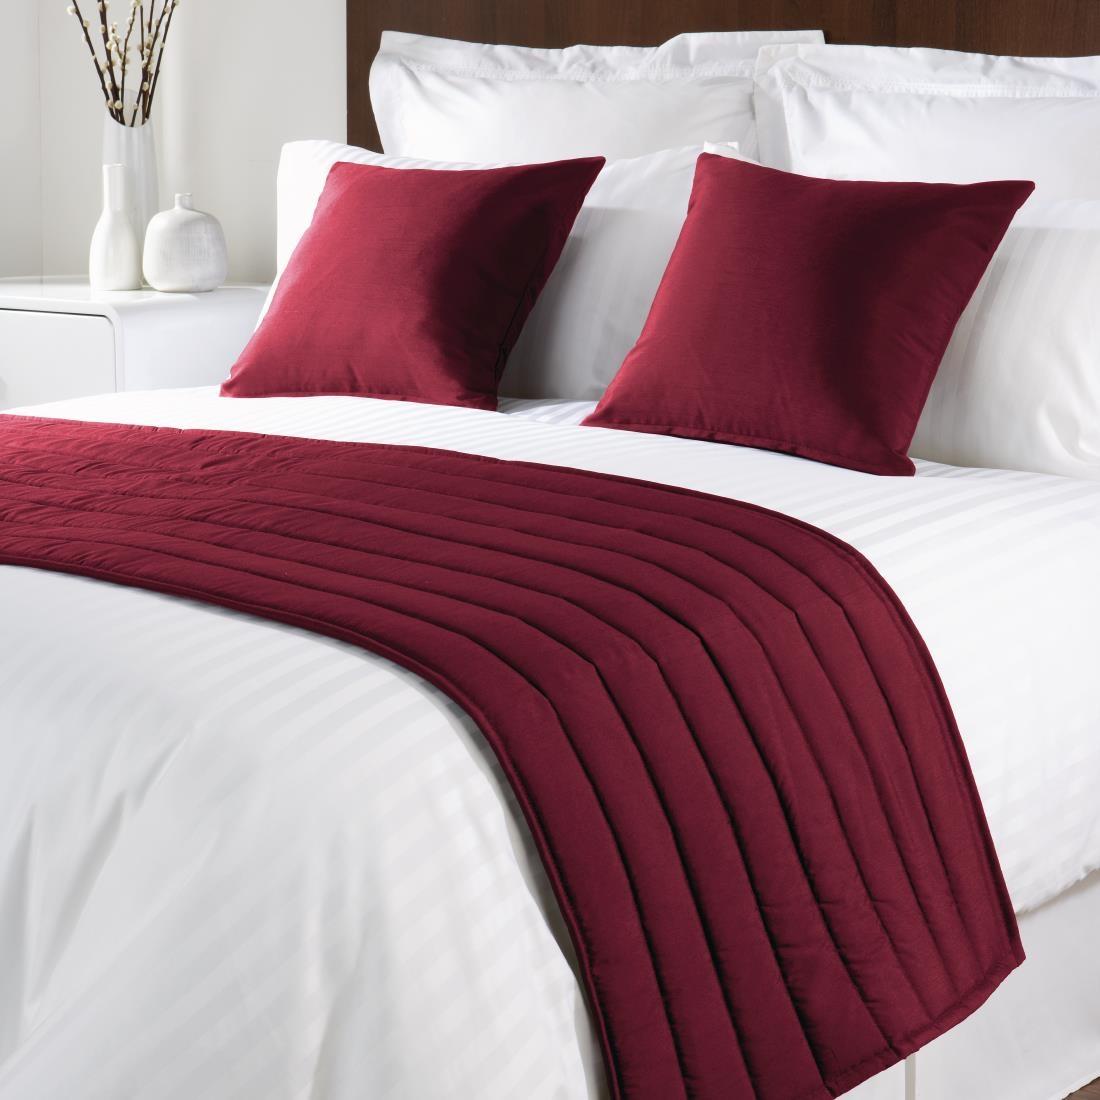 Mitre Comfort Simplicity Raspberry Bed Runner King Size - GU983  - 1